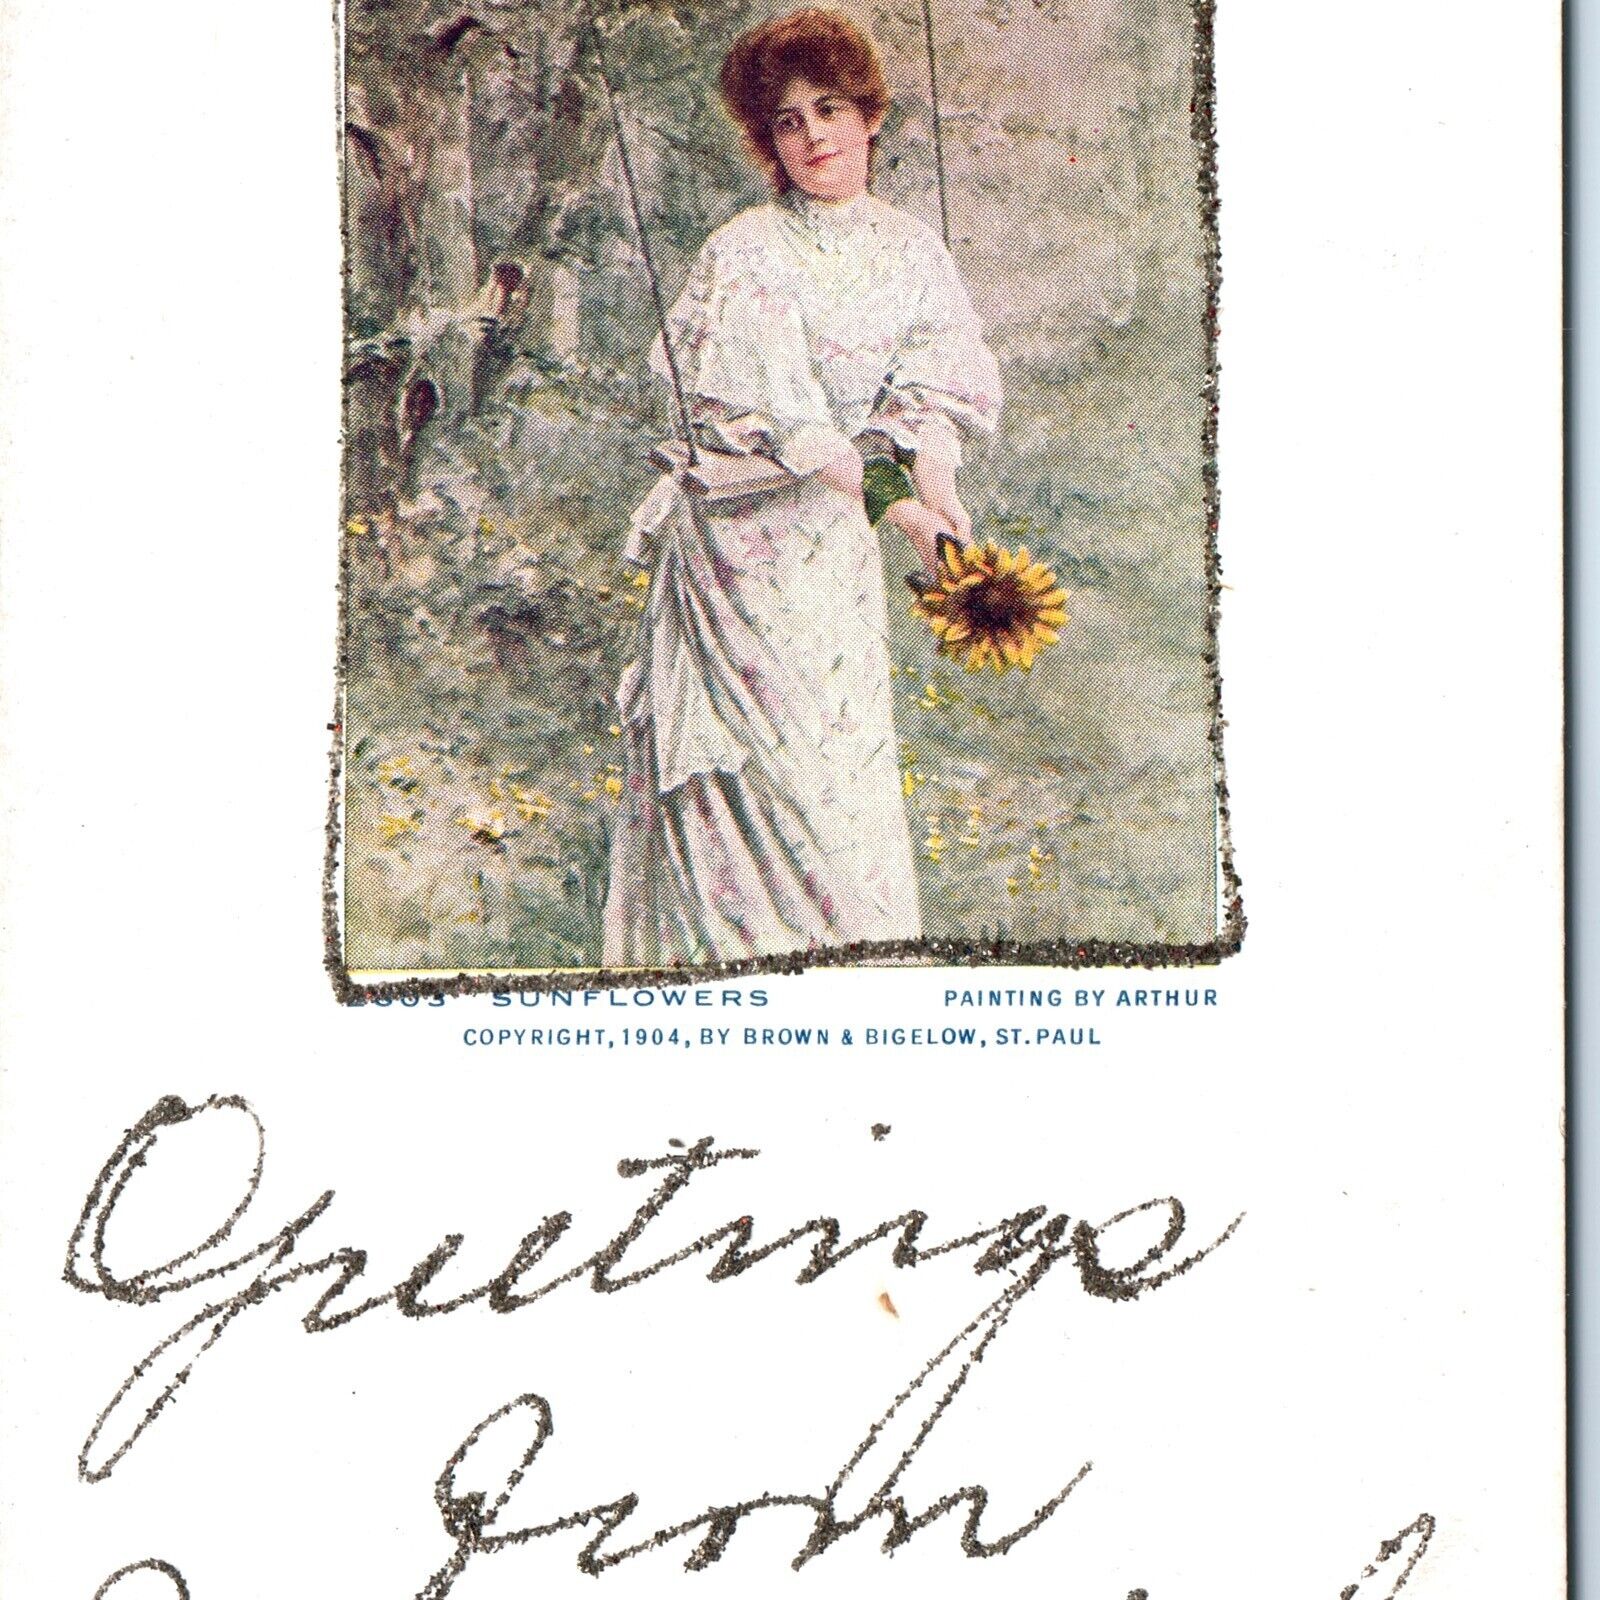 c1900s Minneapolis, MN Greetings Arthur Sunflowers Painting Brown & Bigelow A153